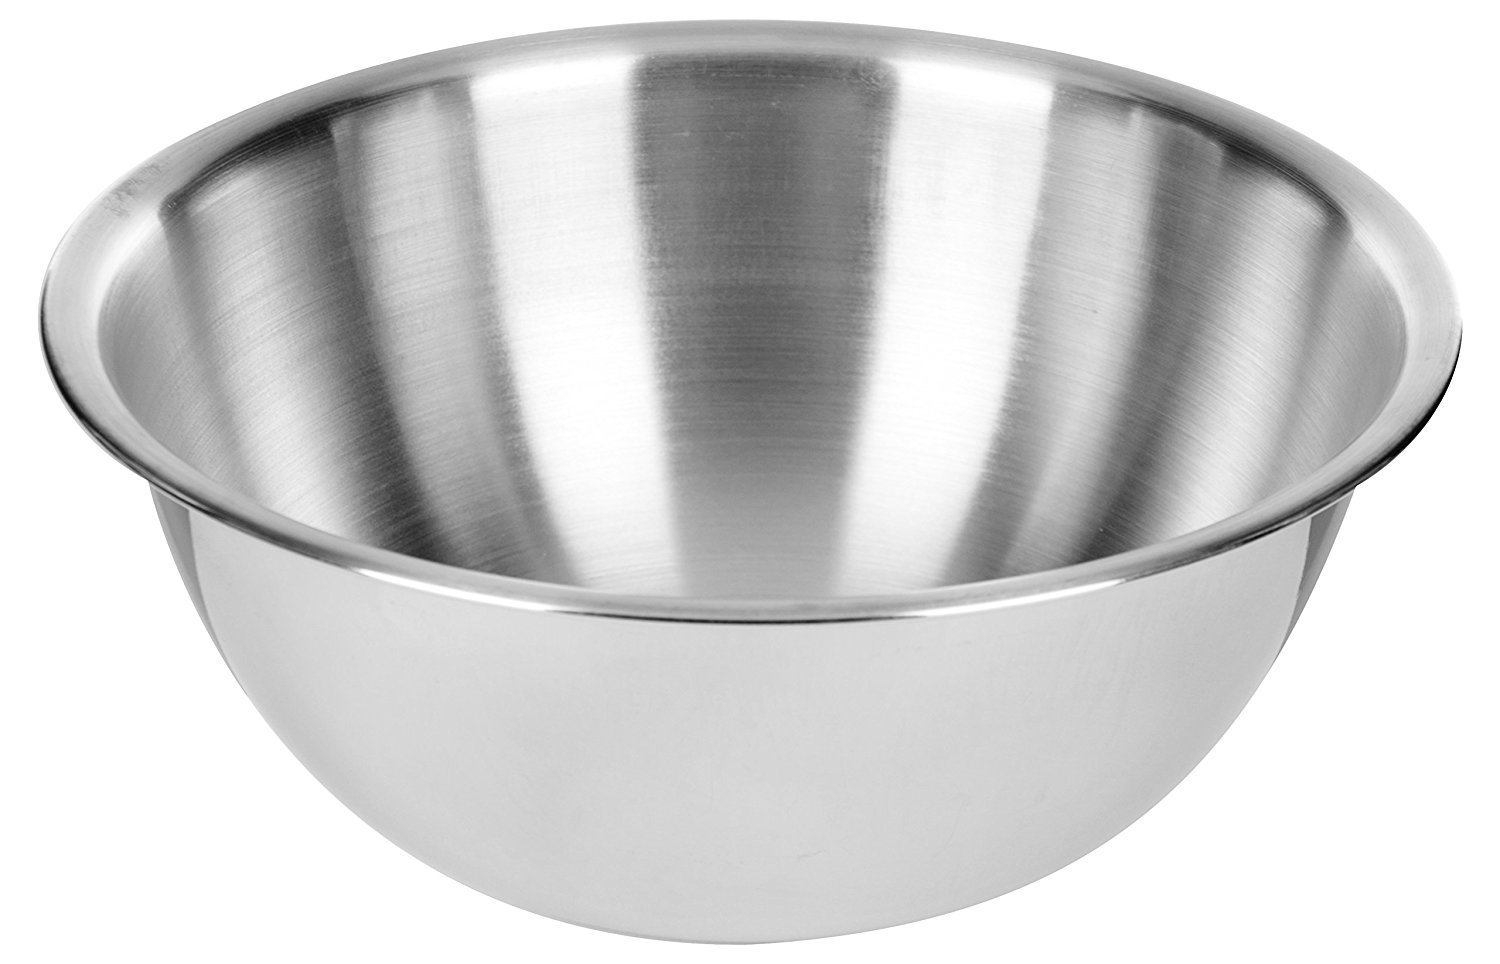 steel mixing bowl